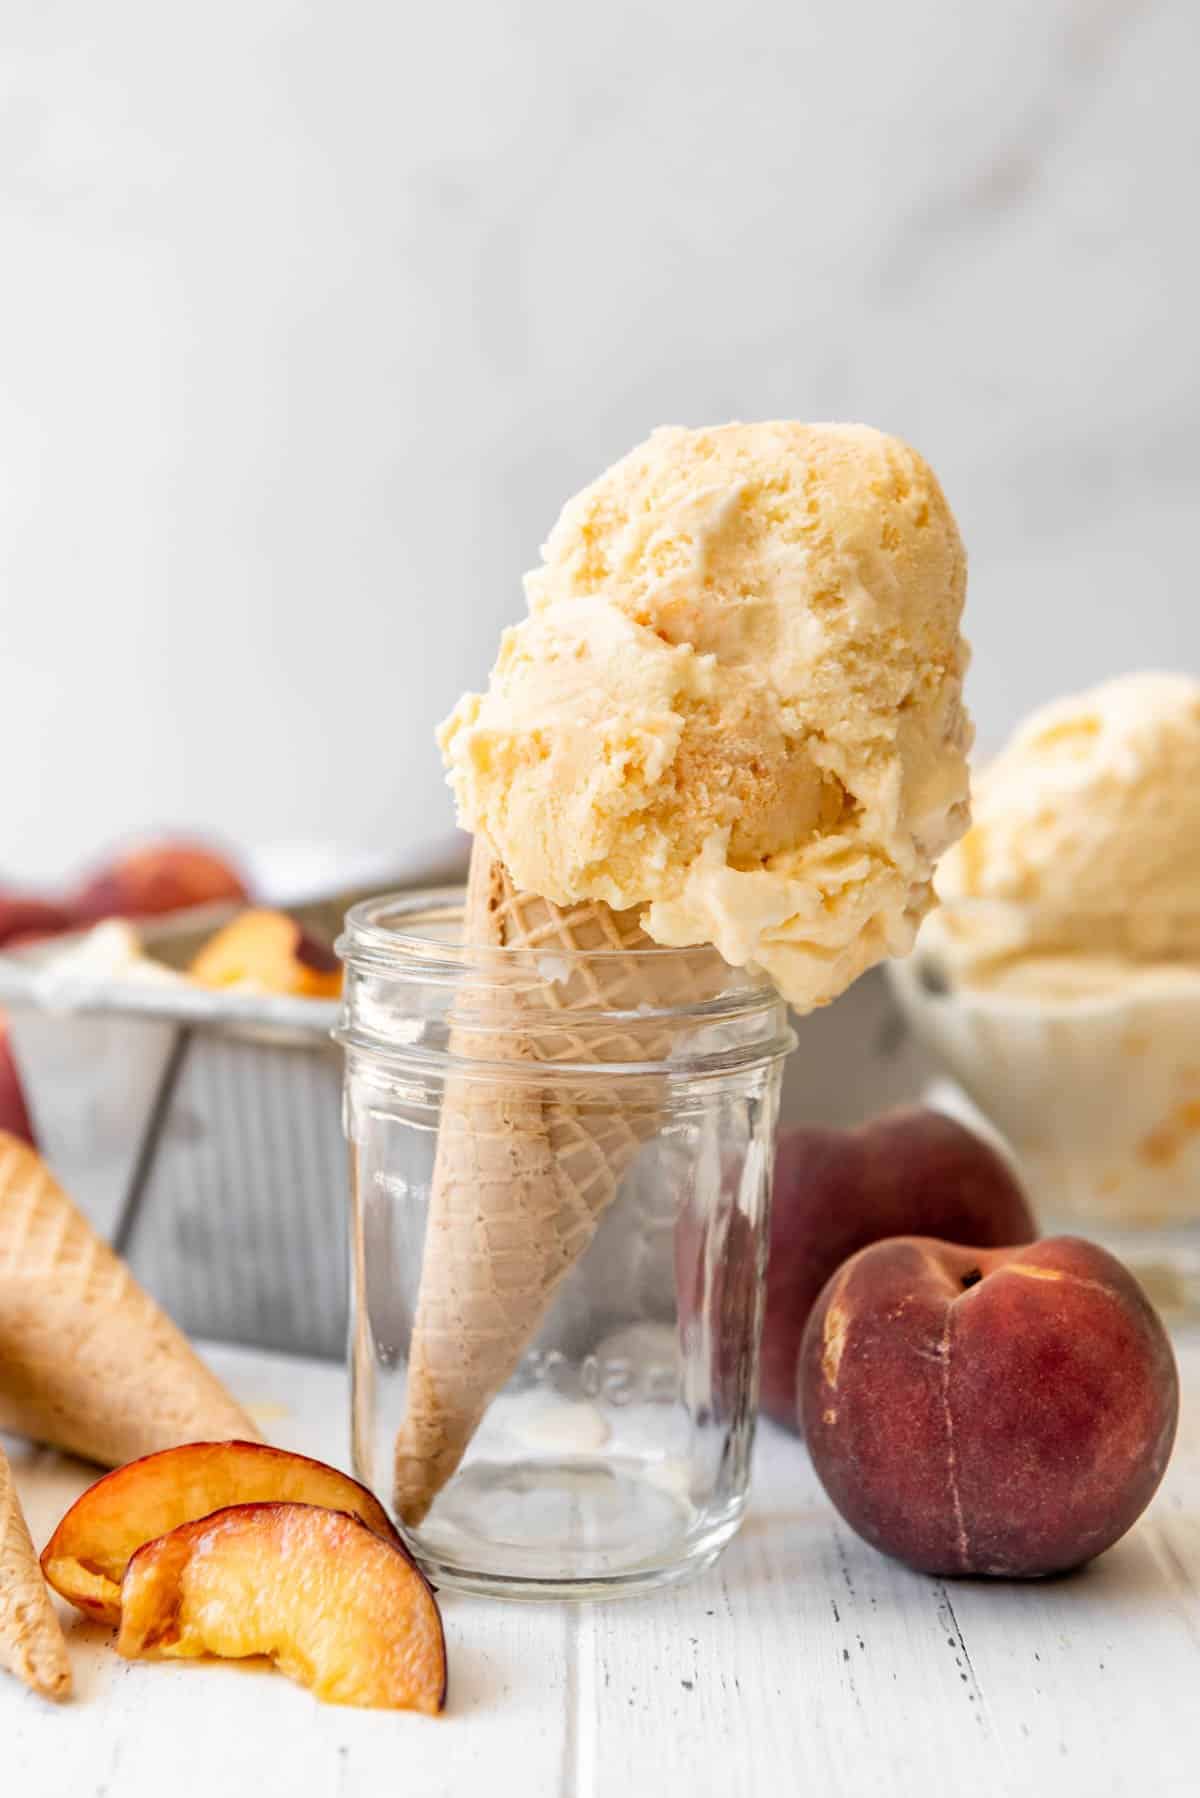 https://houseofnasheats.com/wp-content/uploads/2022/02/Homemade-Peach-Ice-Cream-Recipe-18.jpg